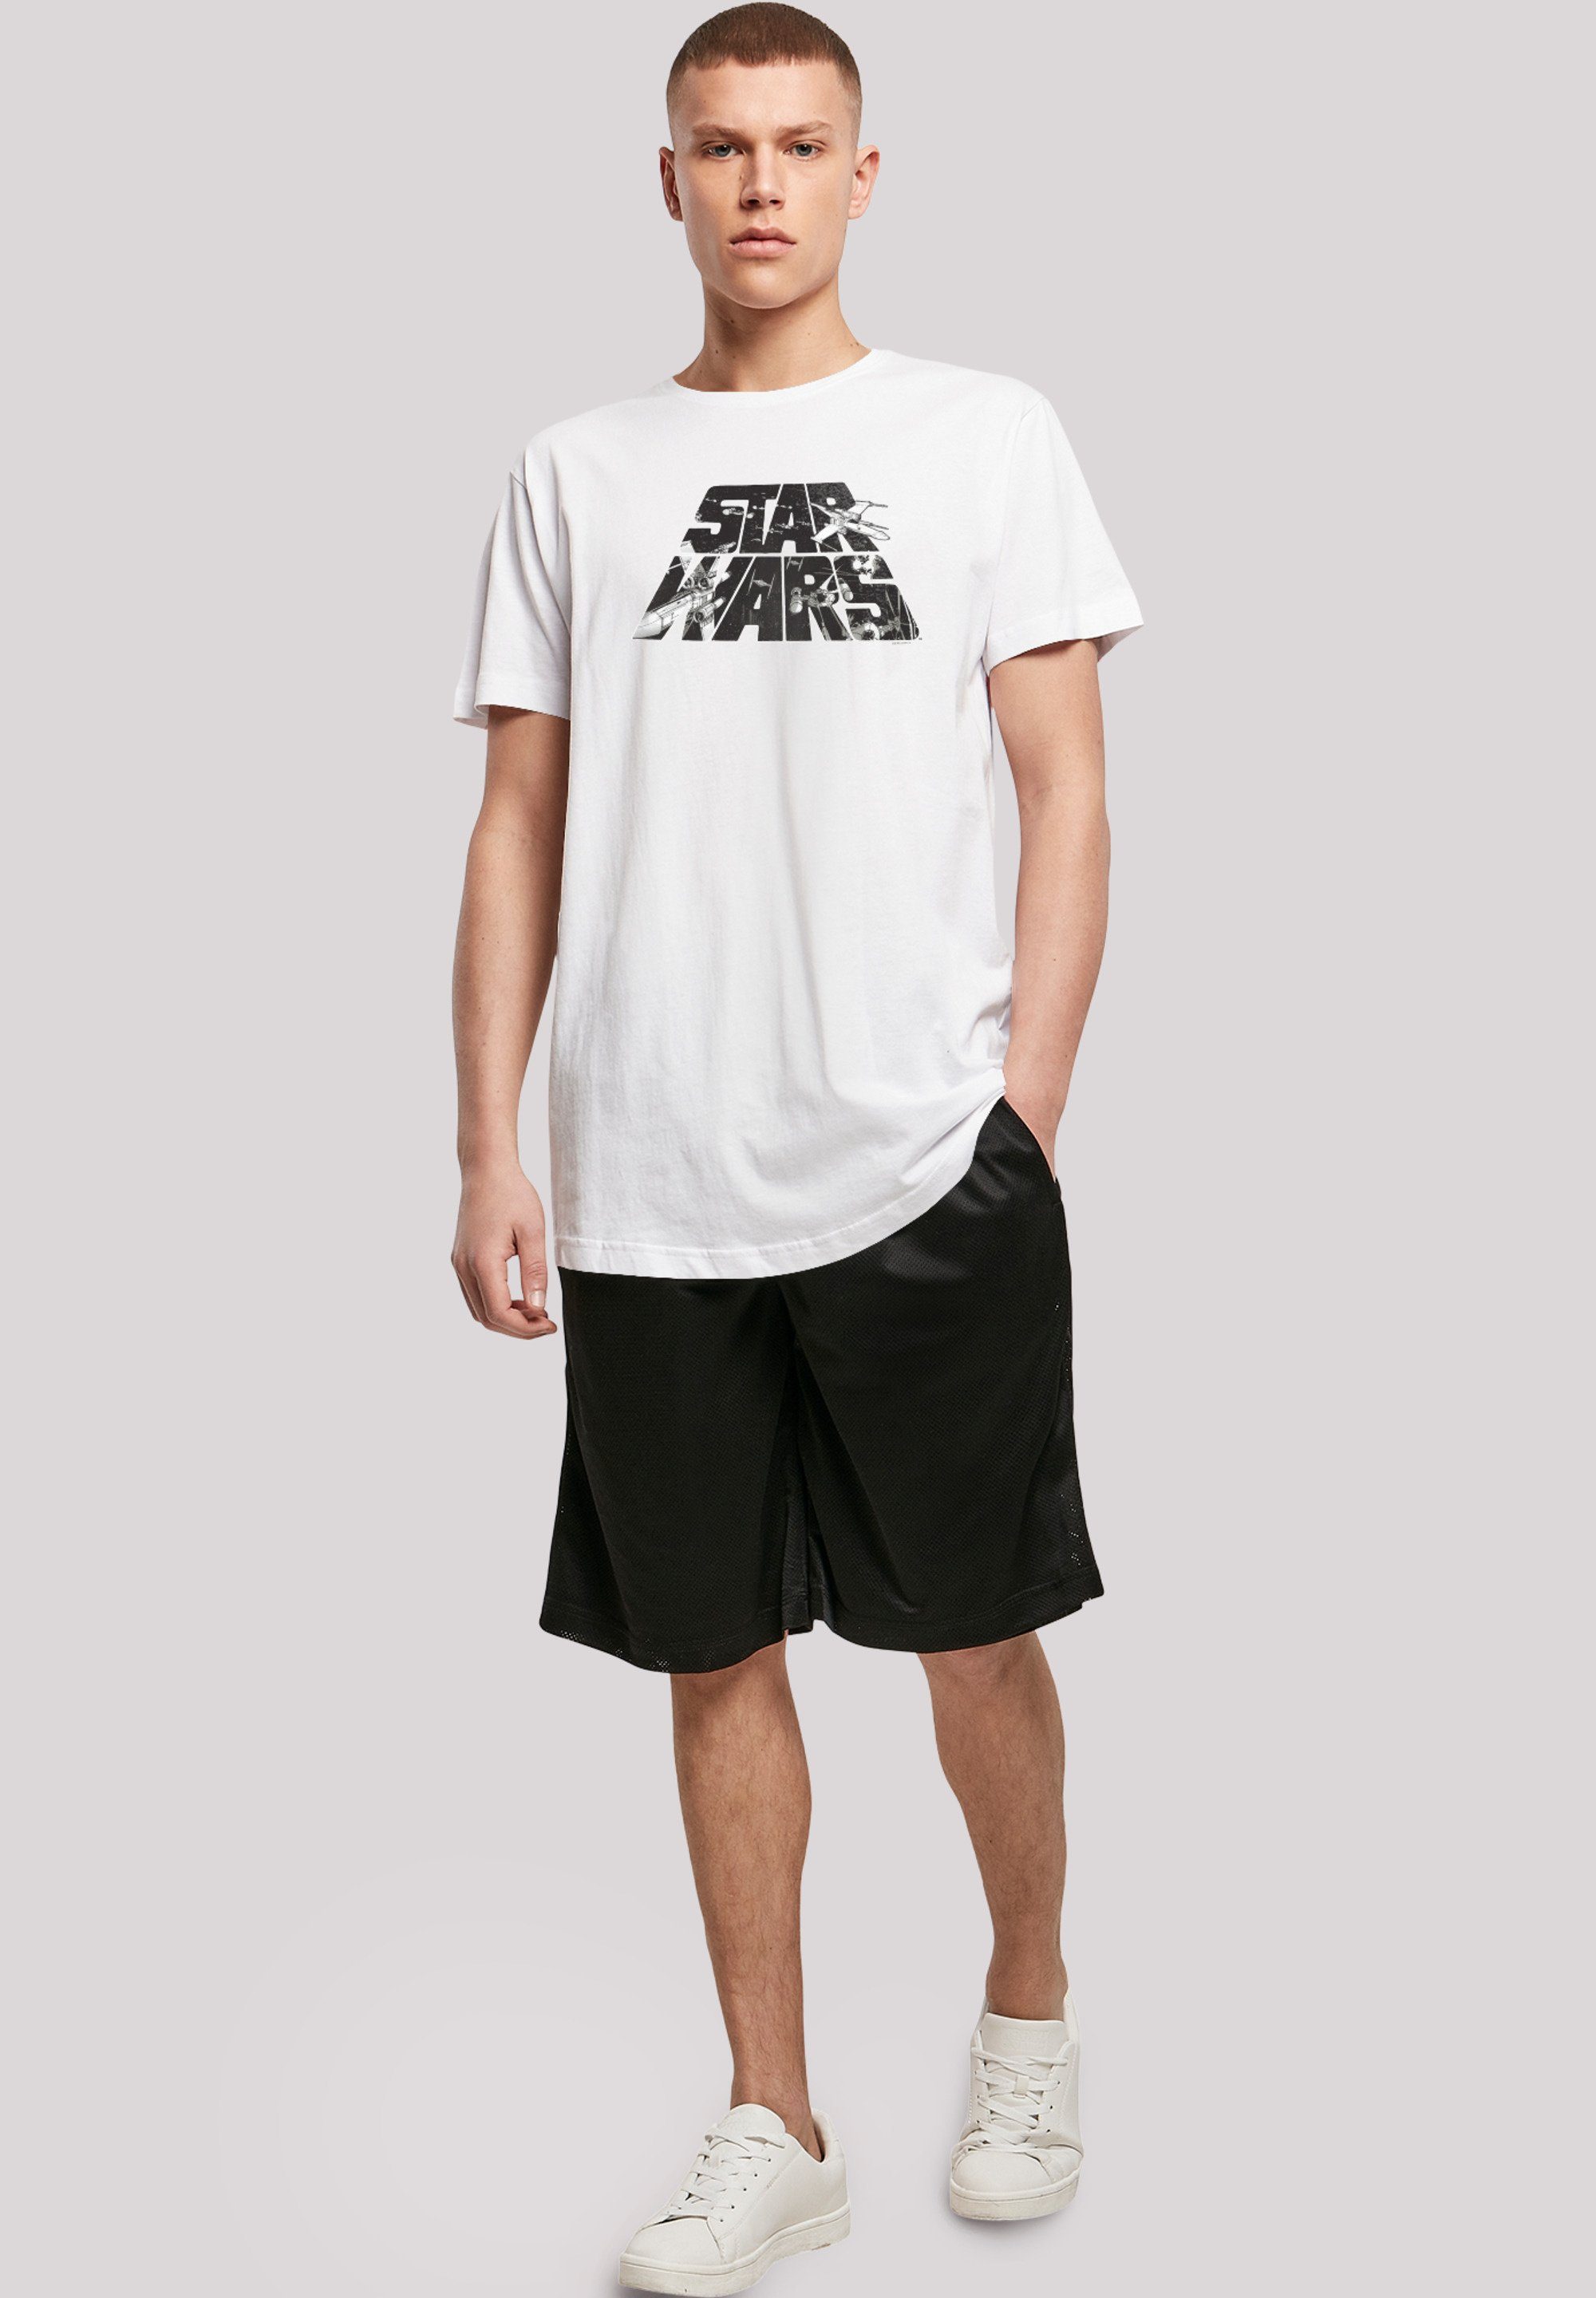 F4NT4STIC T-Shirt Star Print Space Logo Sketch Wars